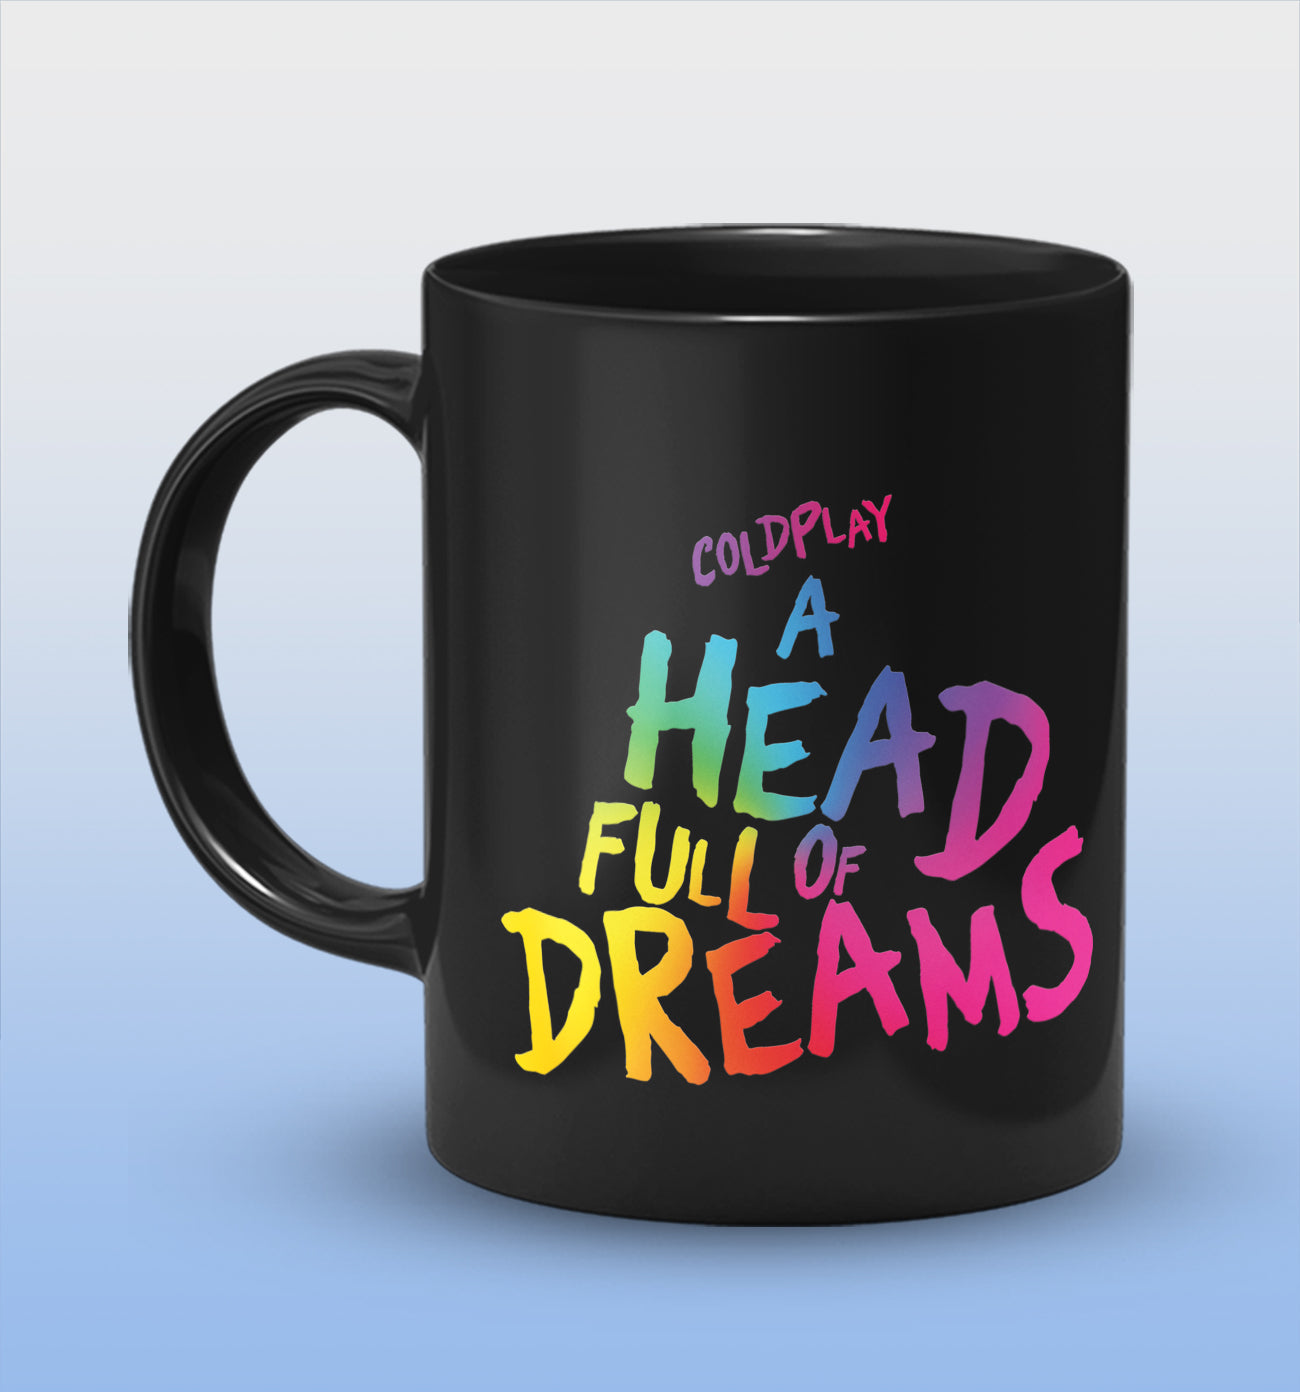 Coldplay A Head Full of Dreams Full Black Cermic Coffee Mug 330 ml, Microwave & Dishwasher Safe| CM-R140